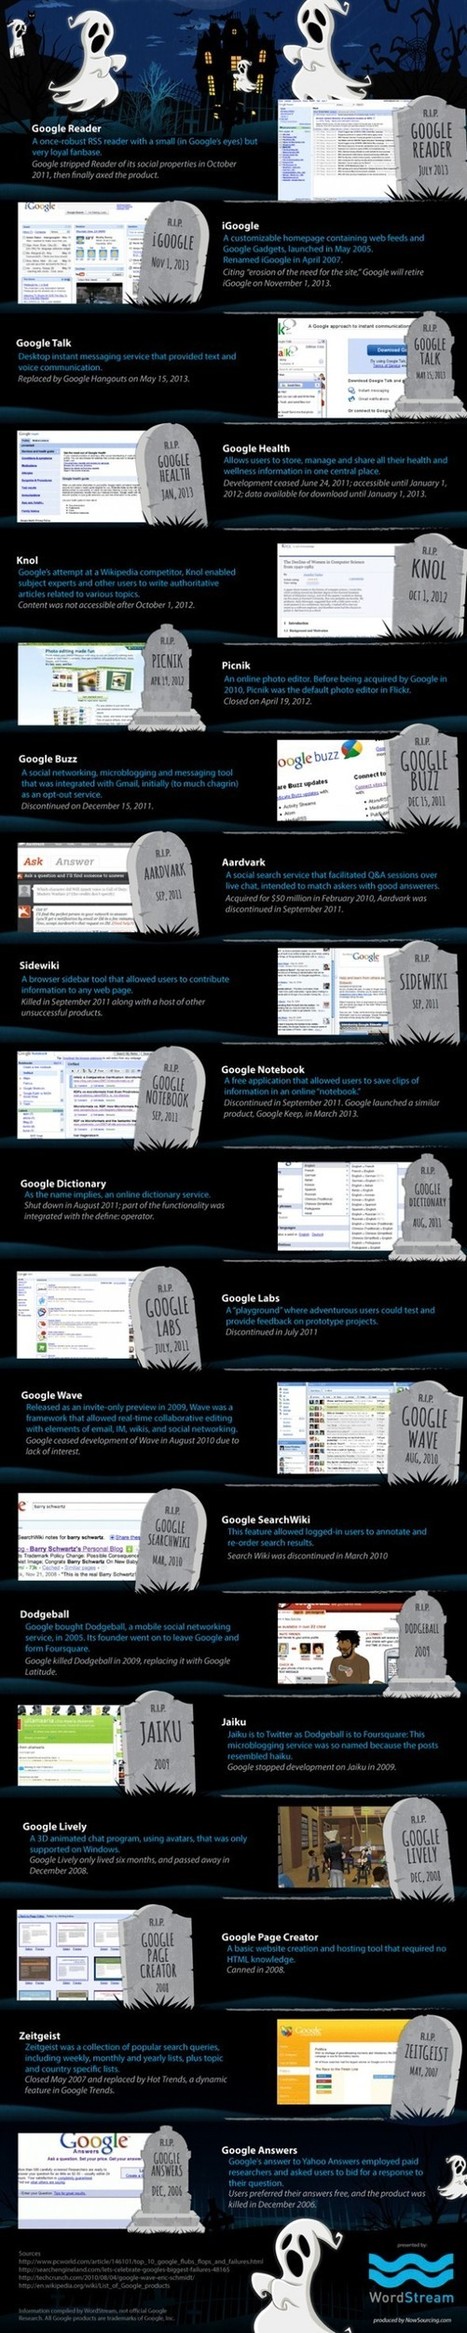 Infographic : Google Graveyard | All Geeks | Scoop.it